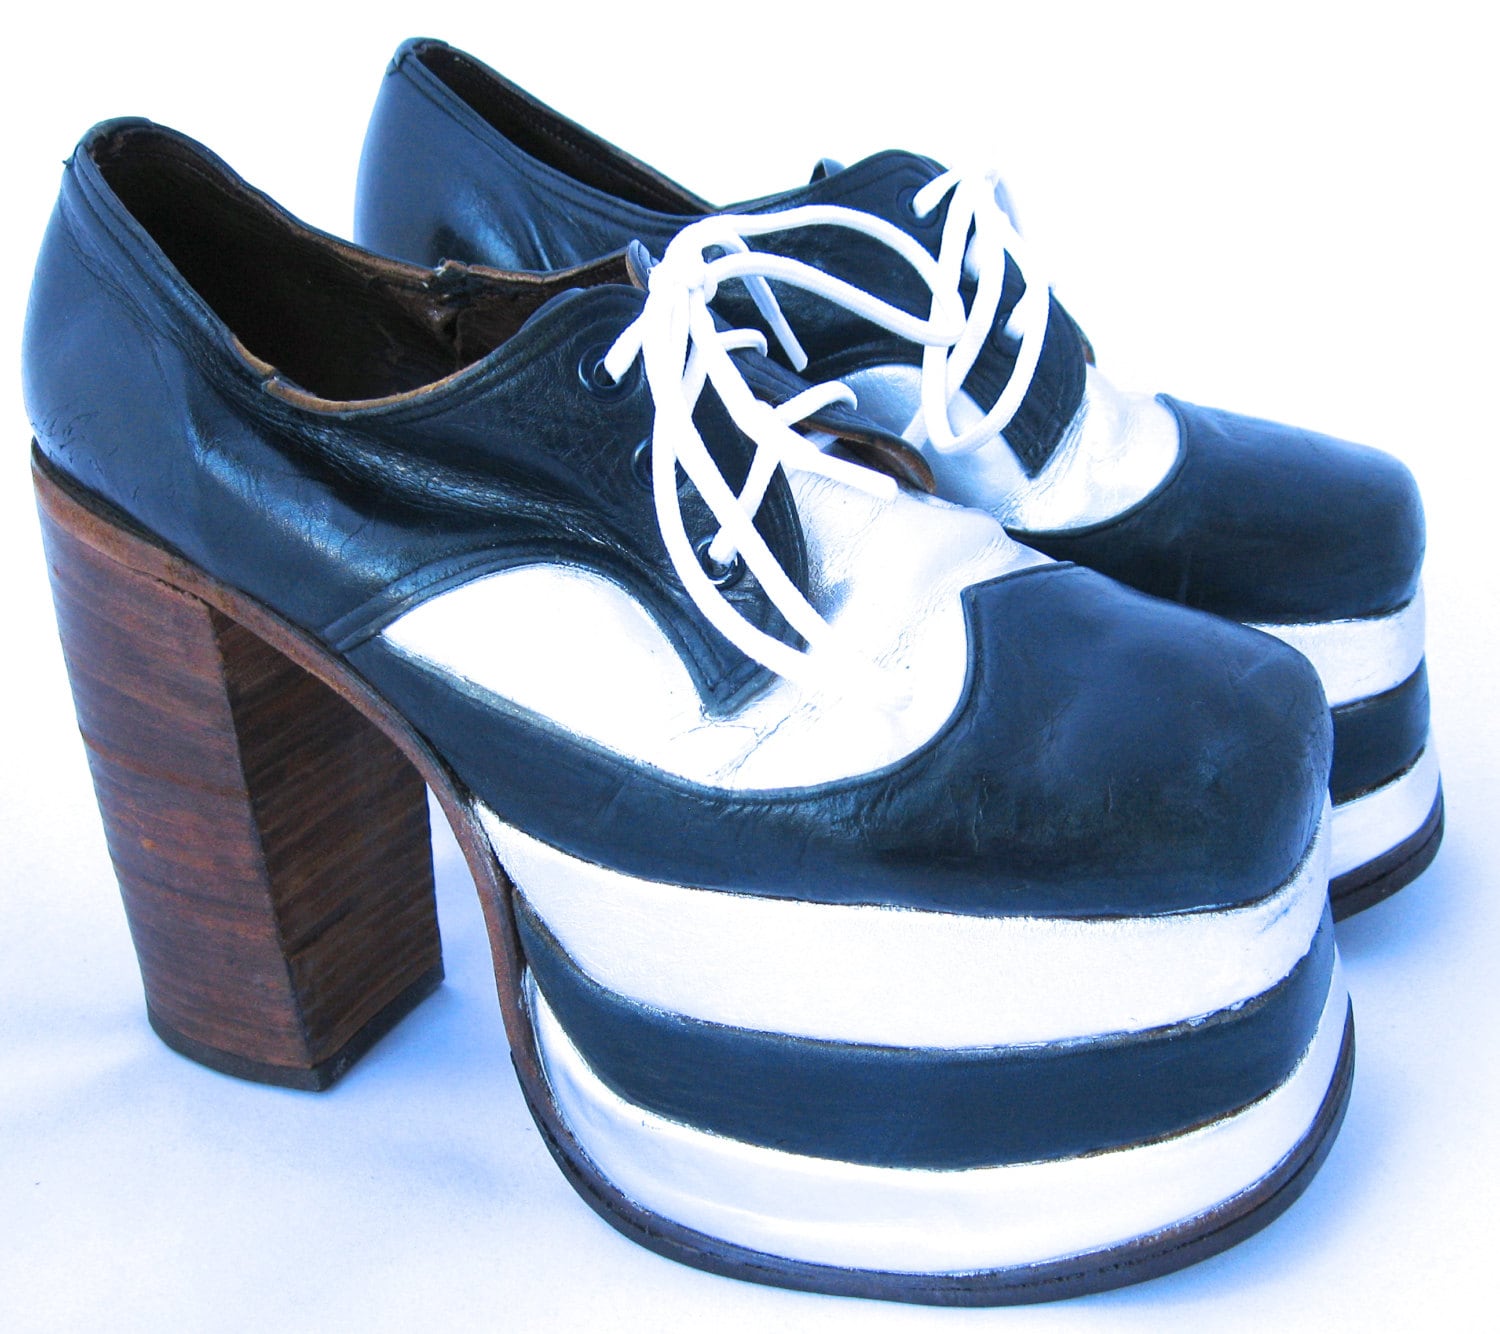 disco shoes